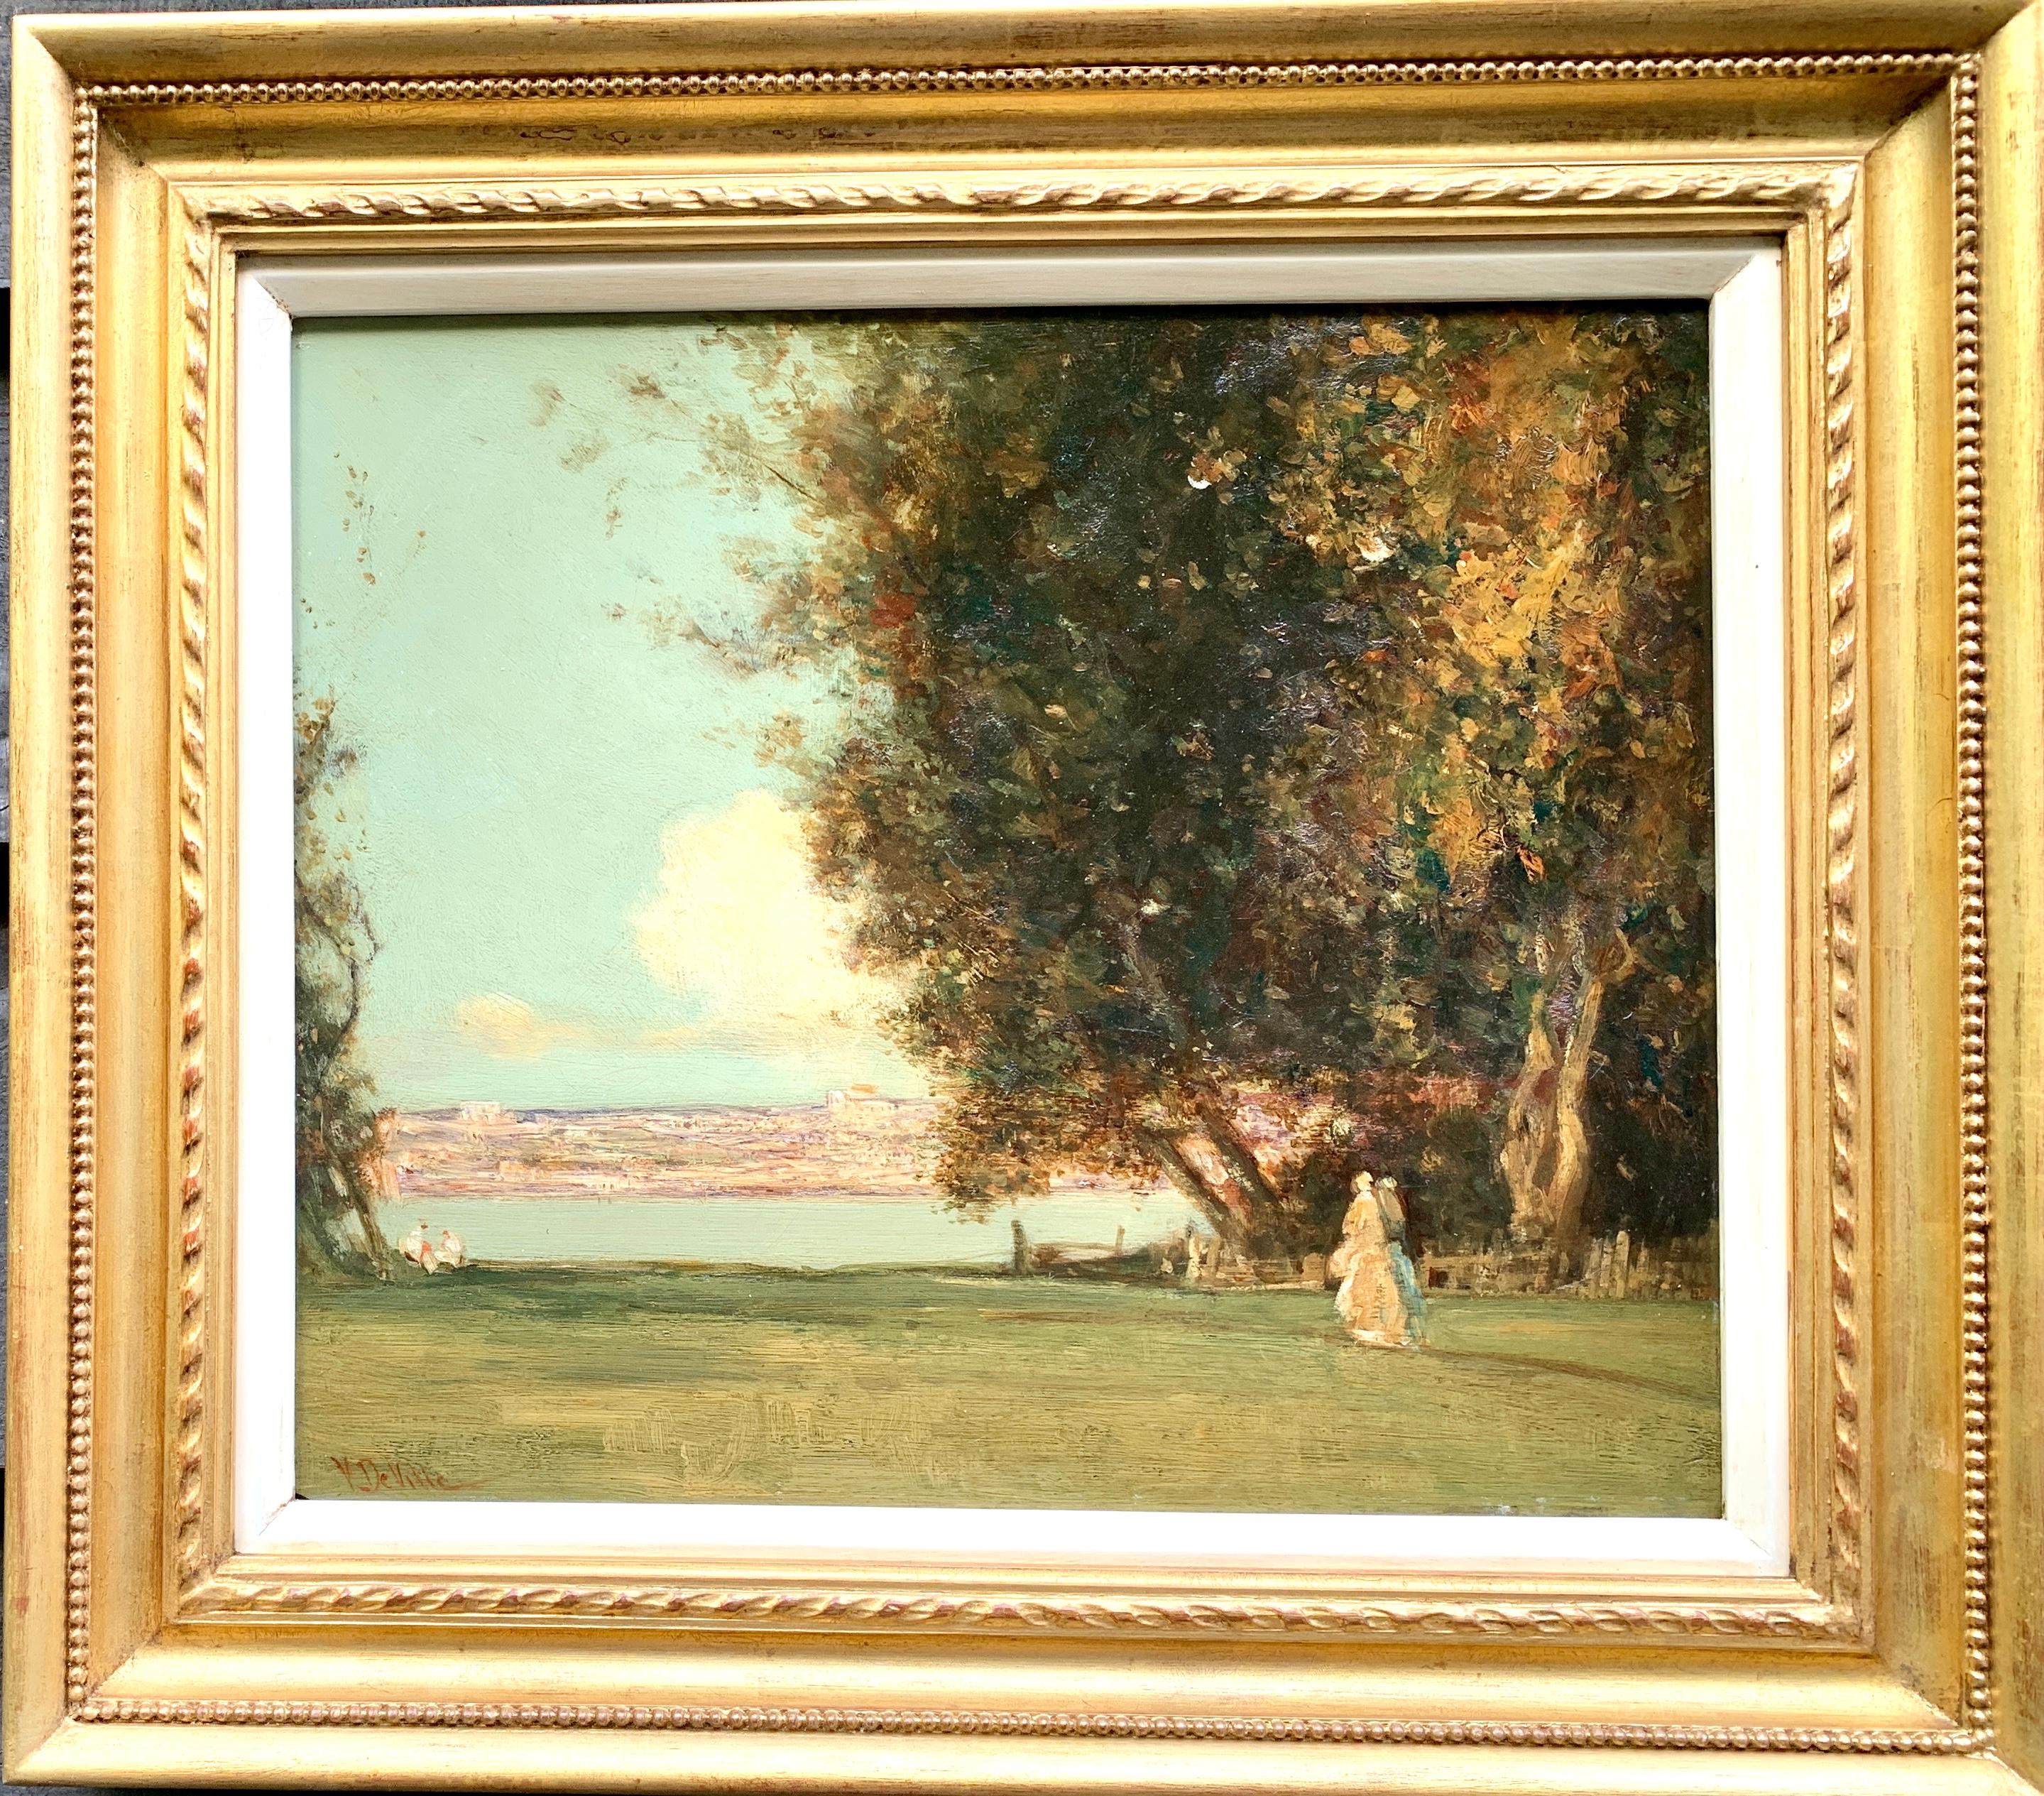 Joseph Vickers De Ville Figurative Painting - Antique 19th century English Impressionist classical landscape with figures 